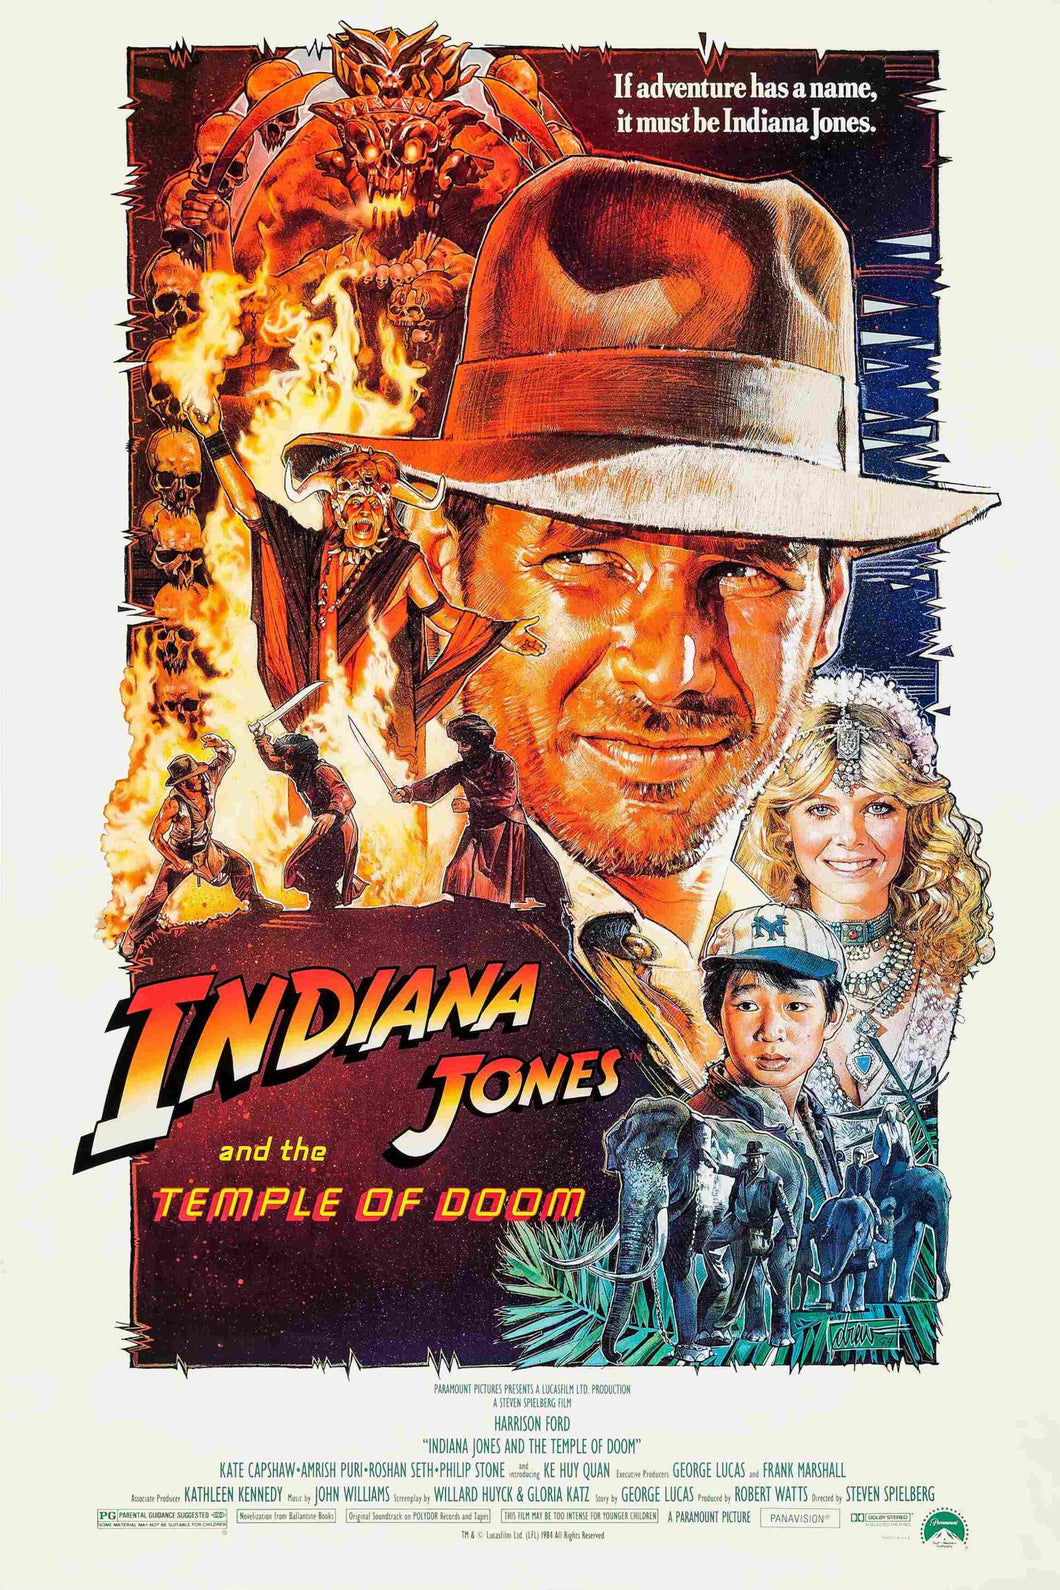 Indiana Jones and the Temple of Doom Poster - egoamo.co.za